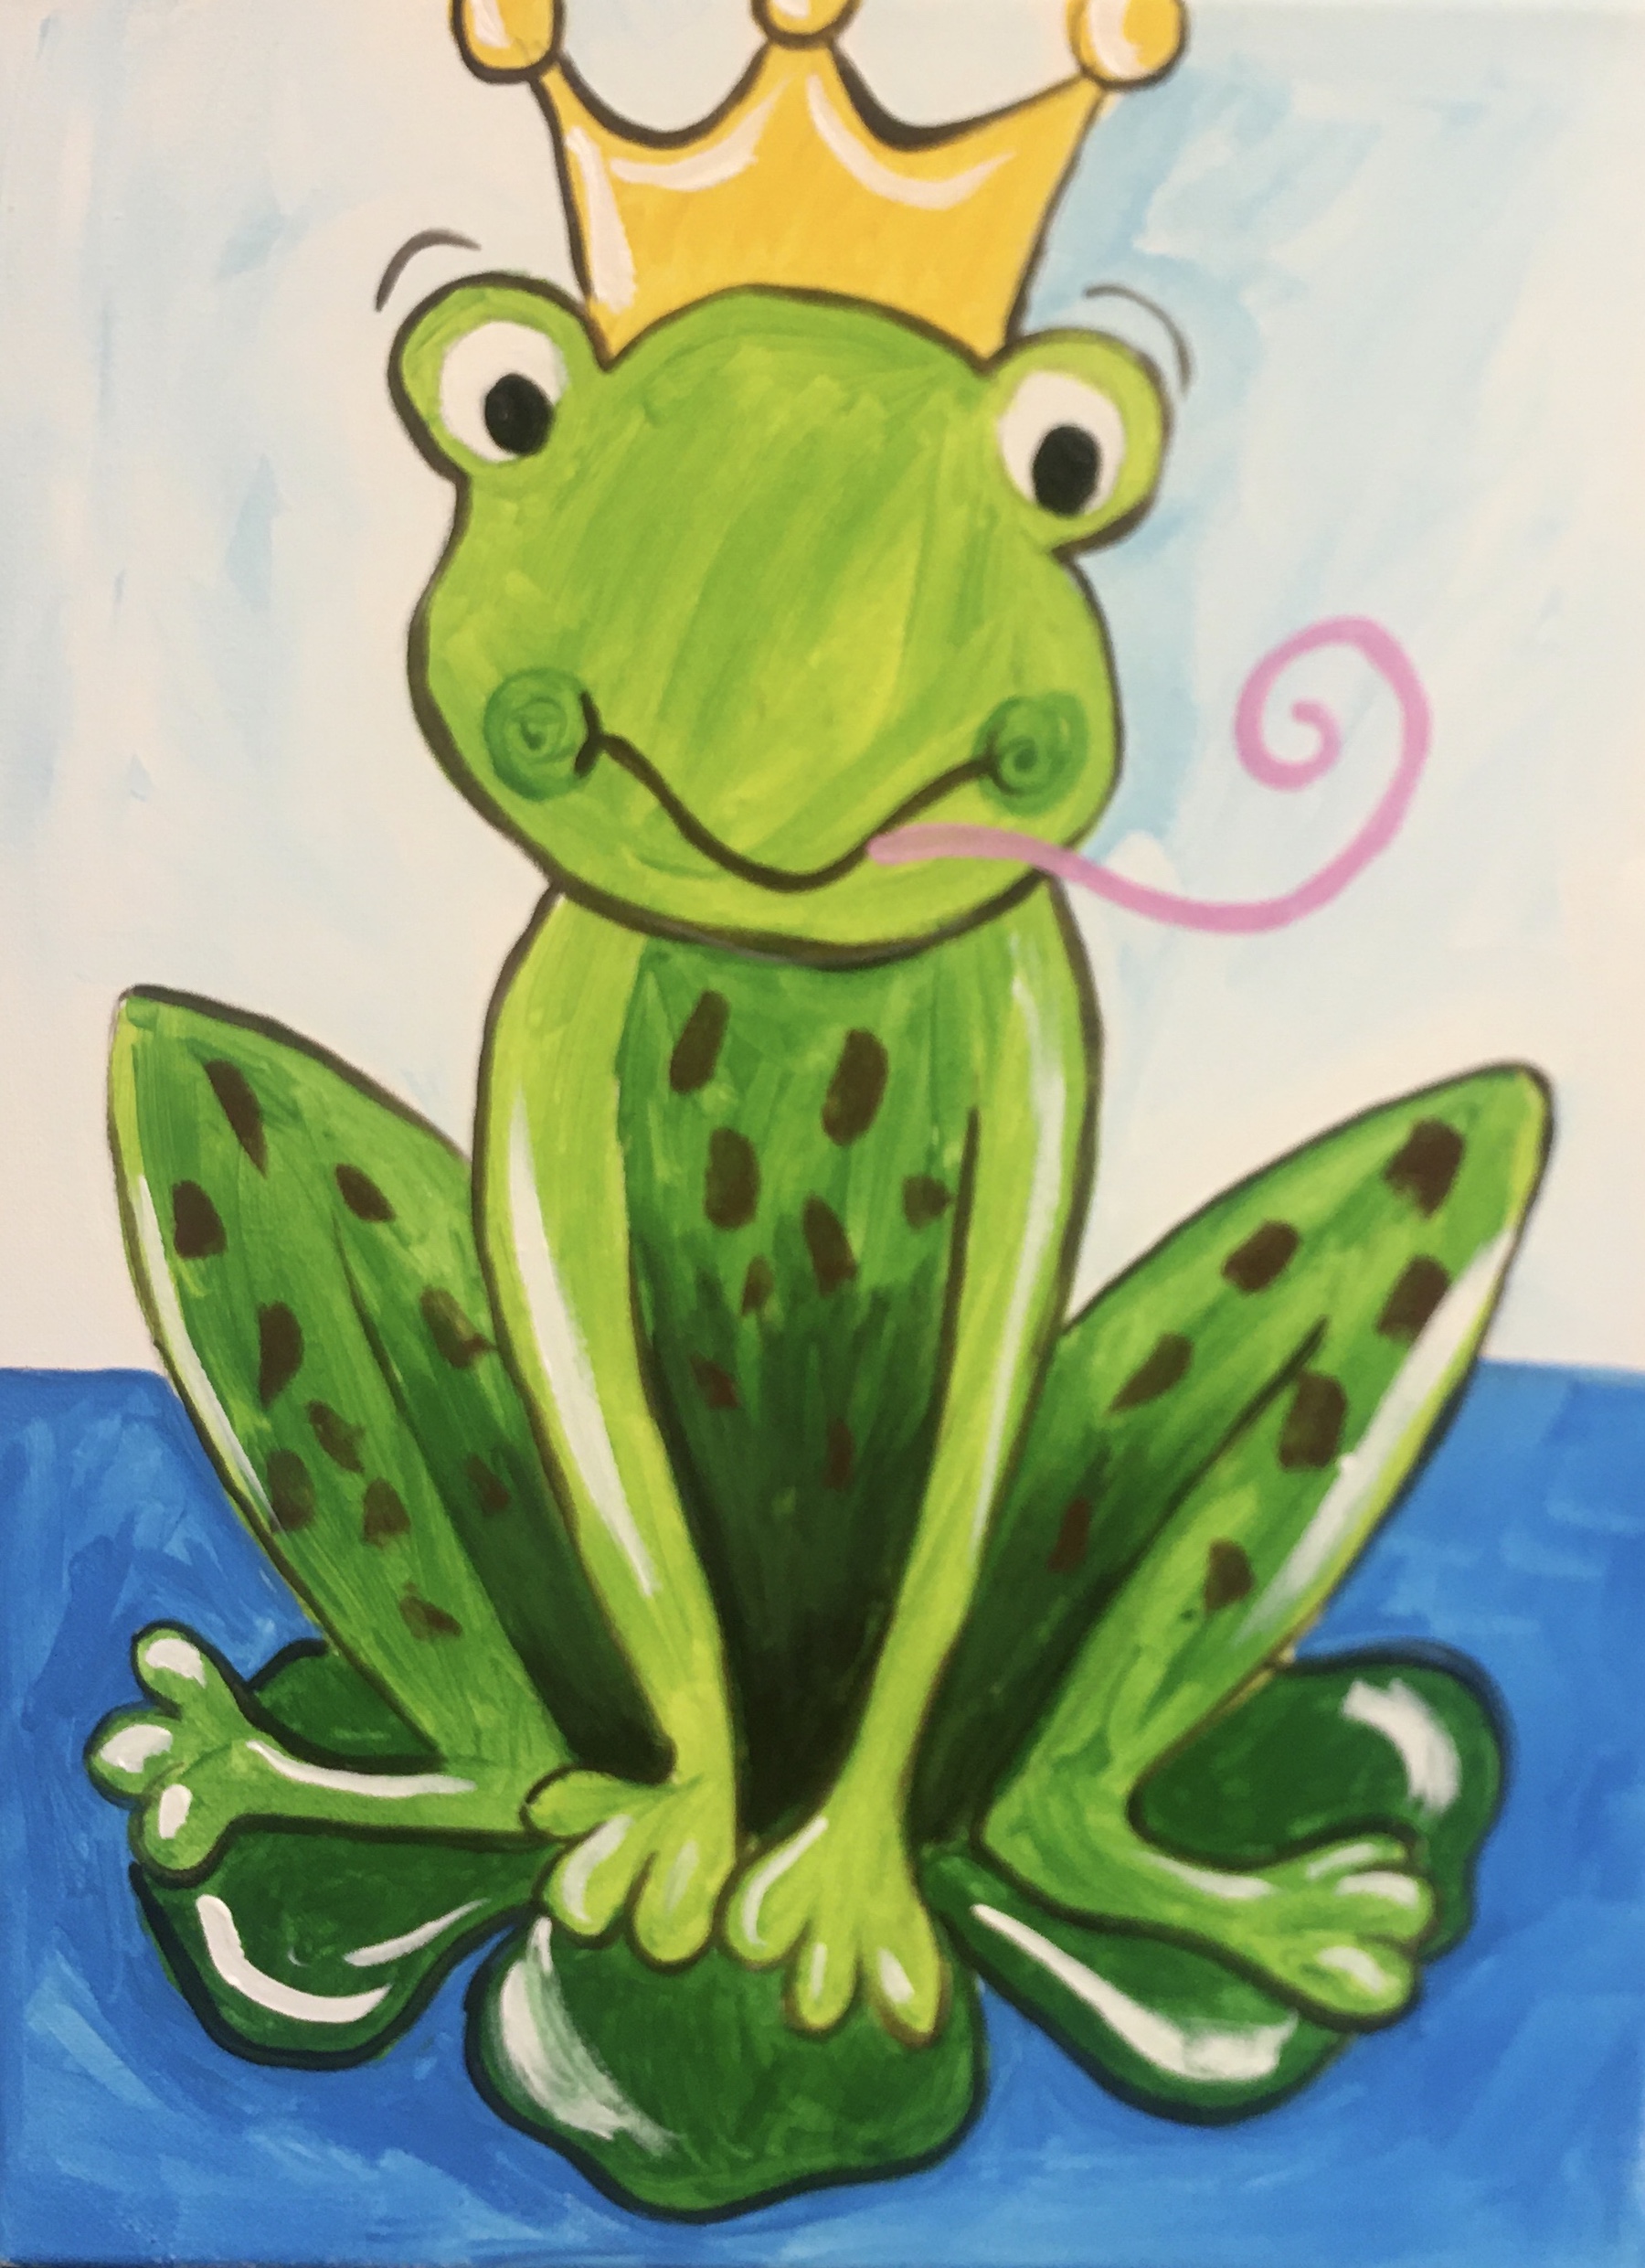 ABK: Crowned Frog